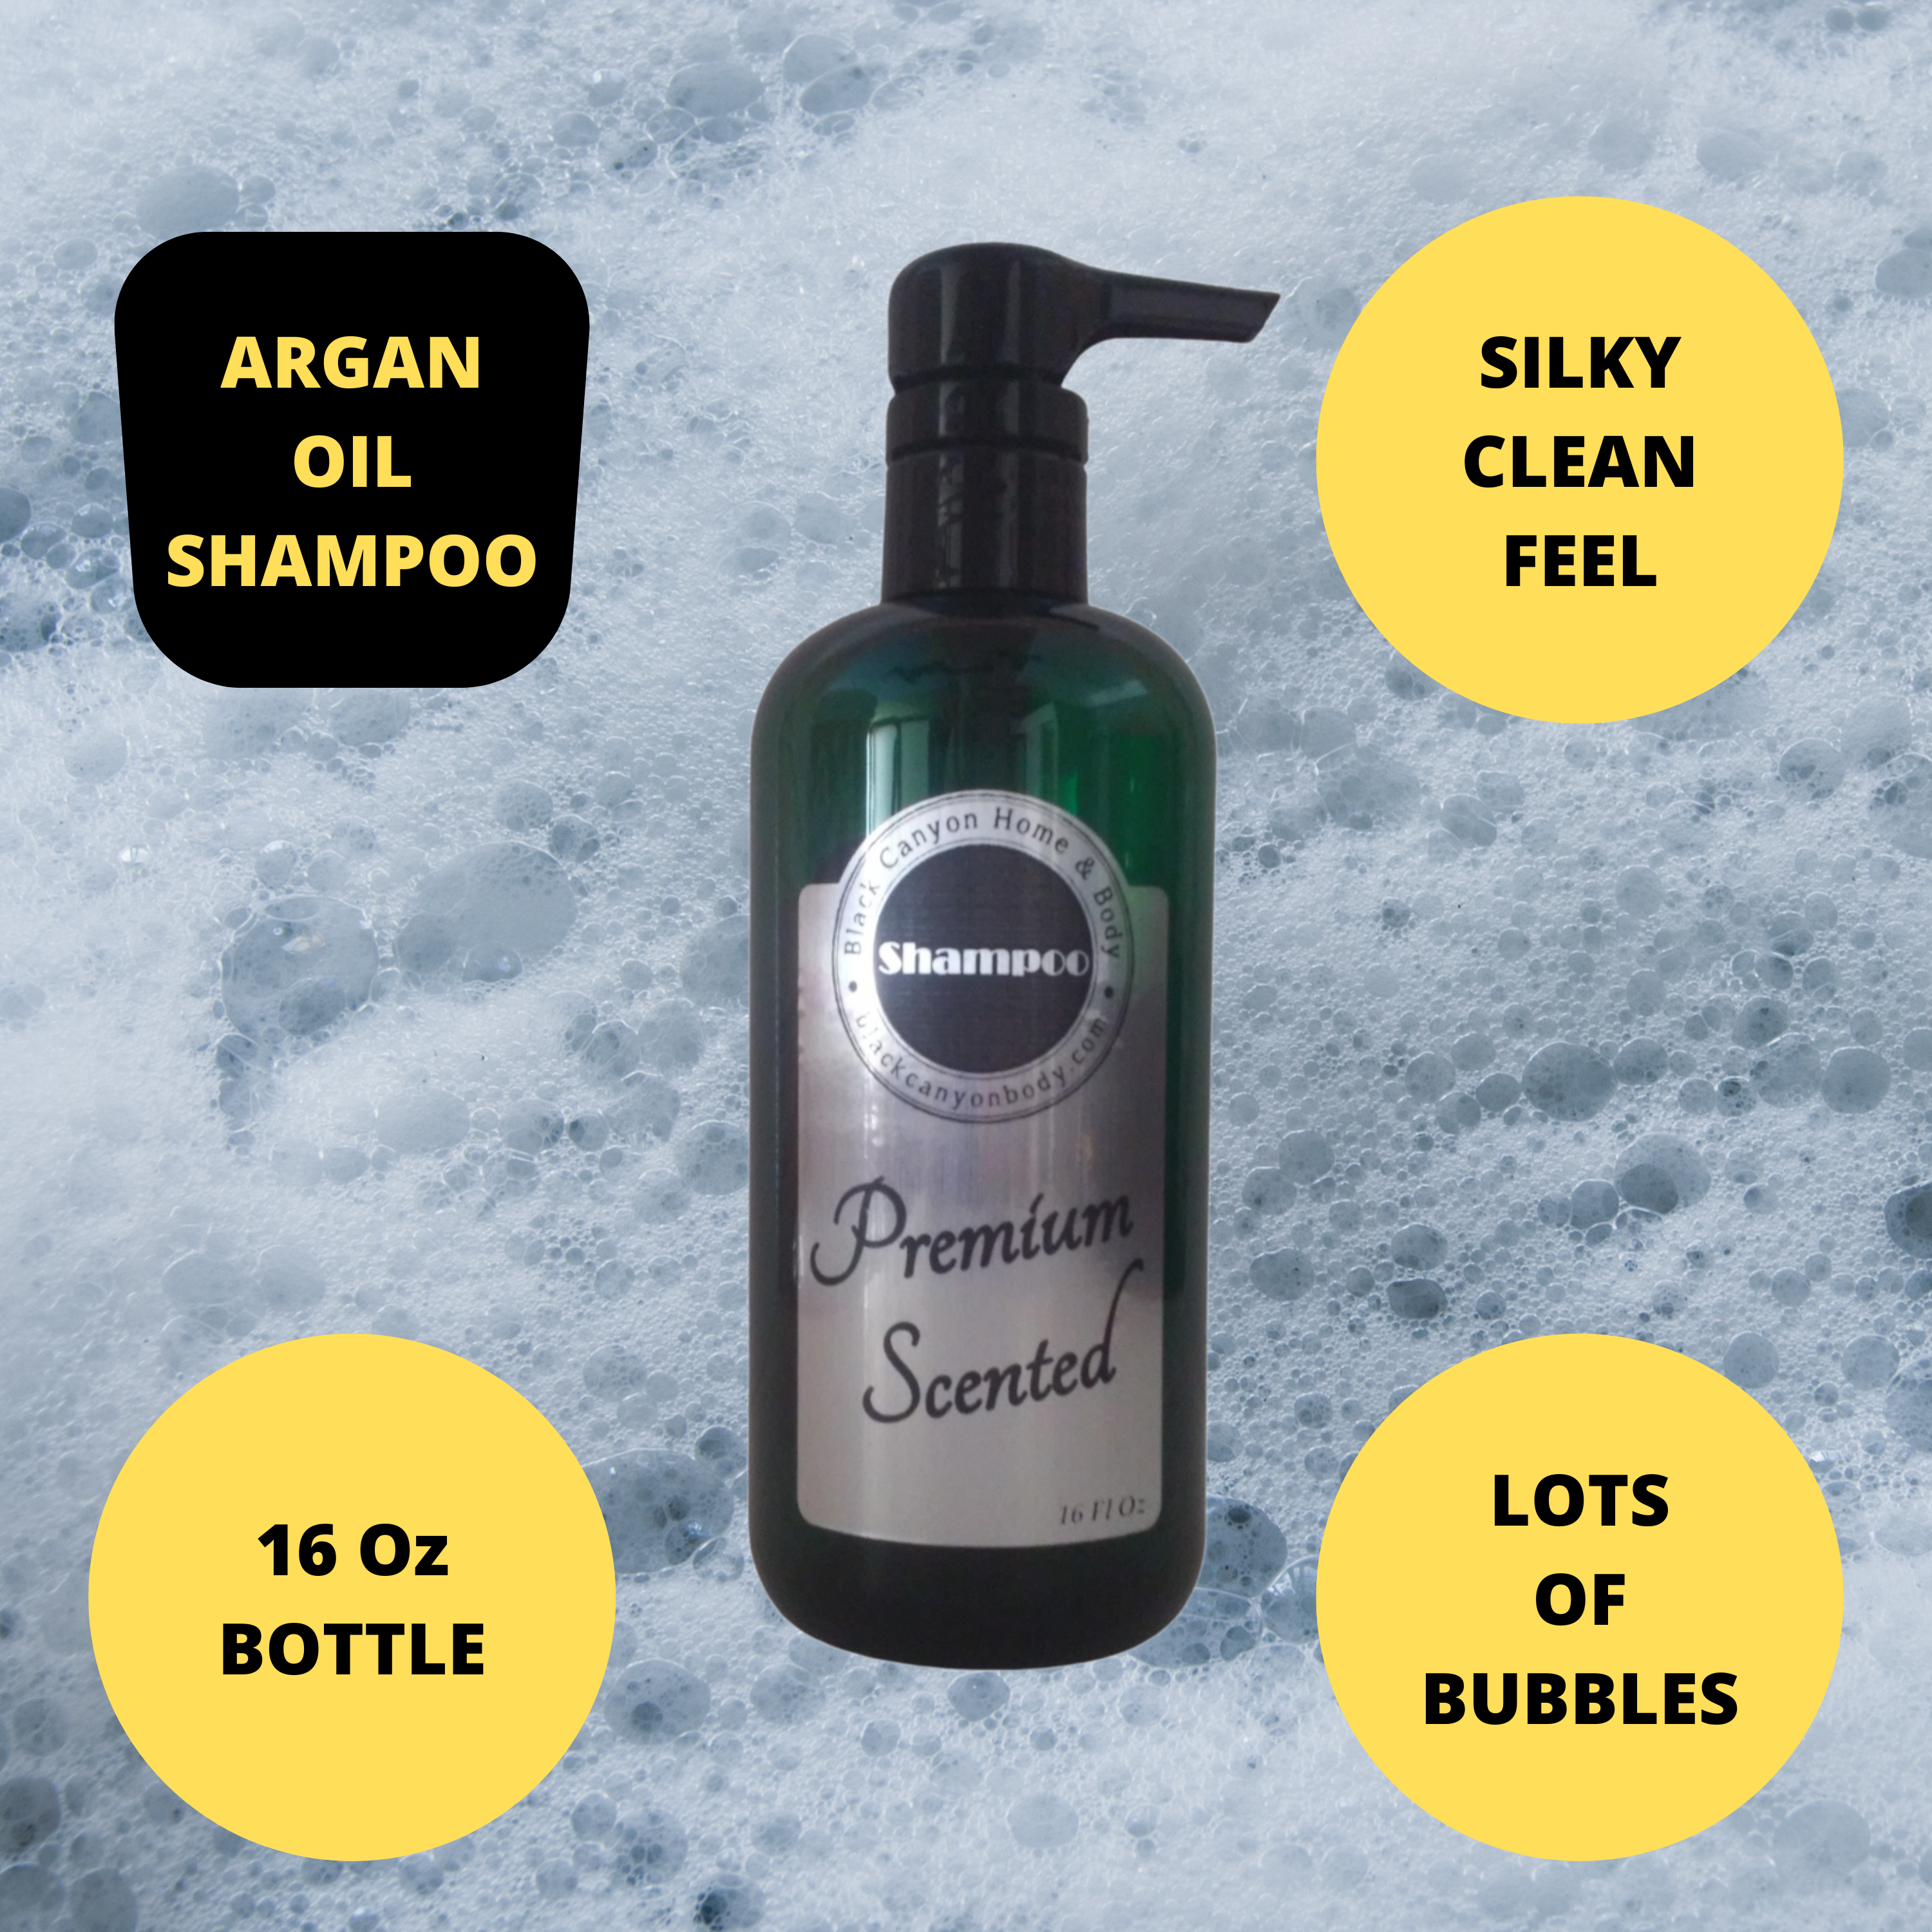 Black Canyon Sour Lemon & Vanilla Scented Shampoo with Argan Oil